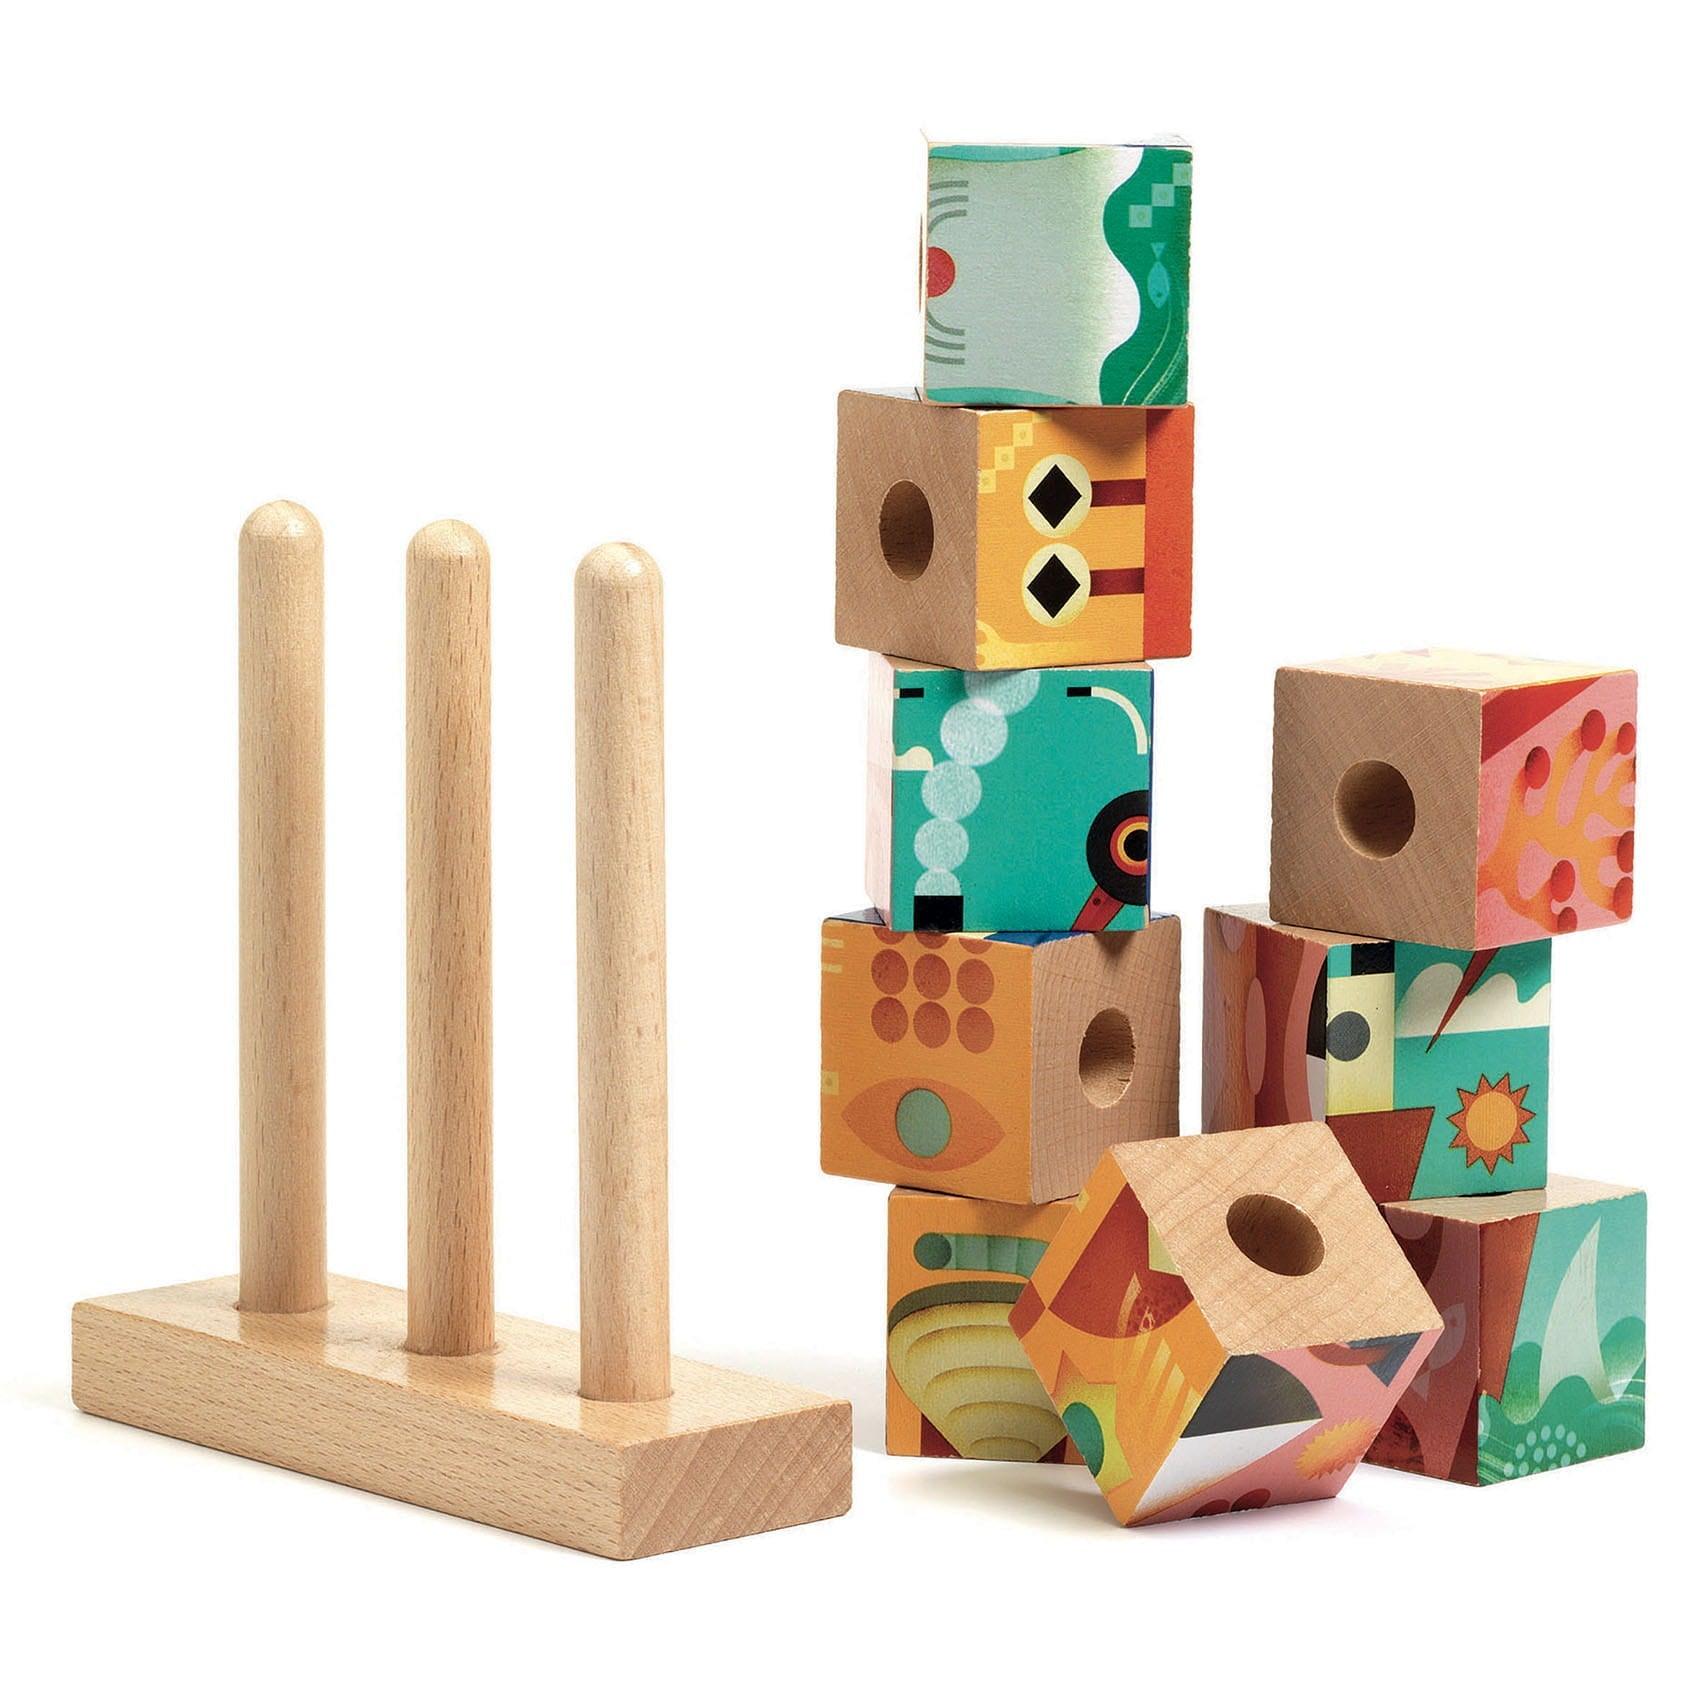 Djeco: wooden blocks sea animals Puzz-up